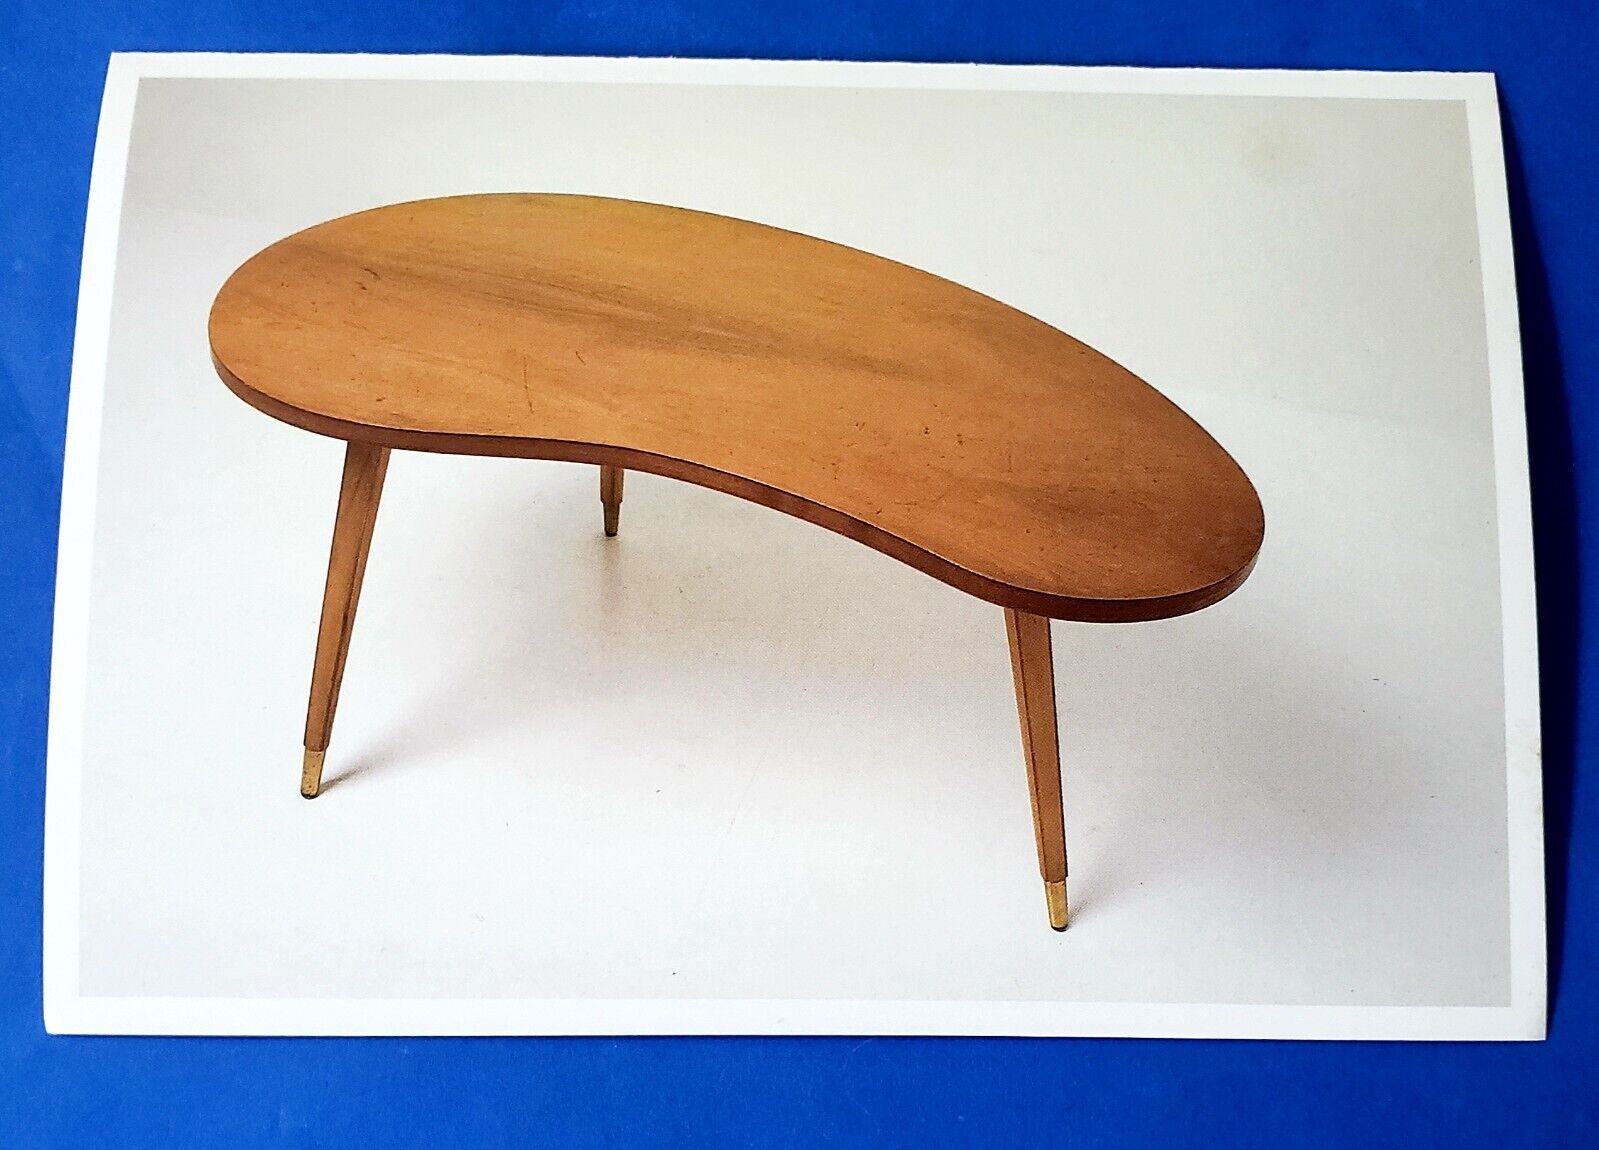 Postcard 1955 Walnut Kidney-shaped Table 50s Design Taschen